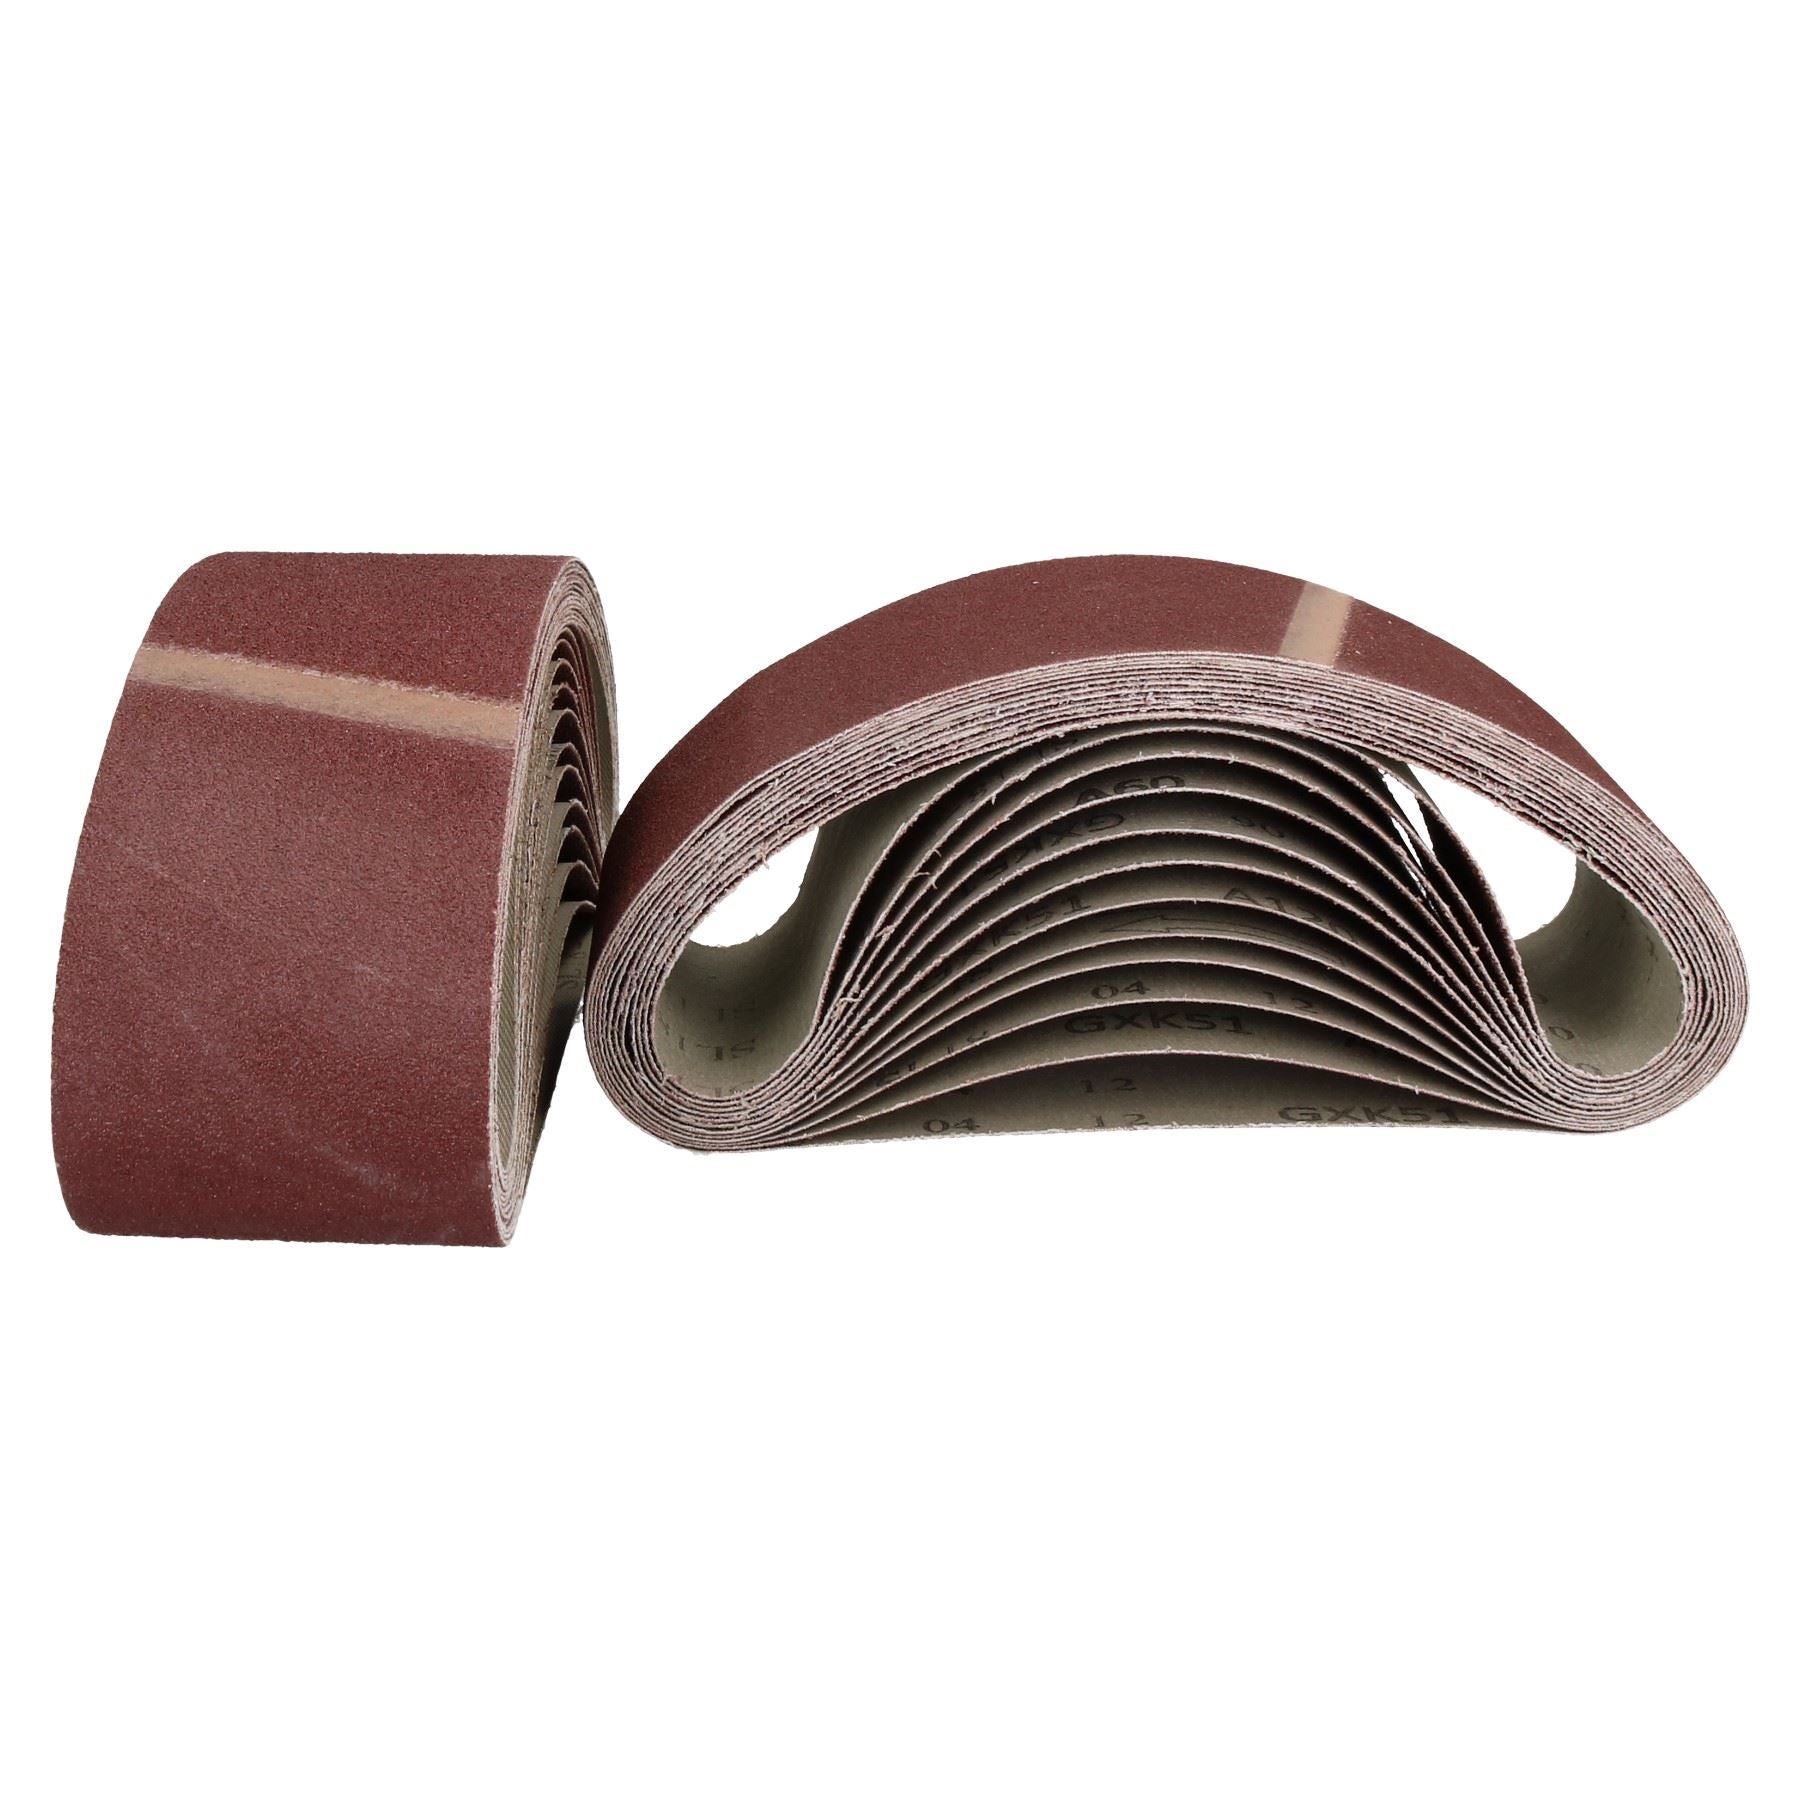 533mm x 75mm Mixed Grit Abrasive Sanding Belts Power File Sander Belt Packs